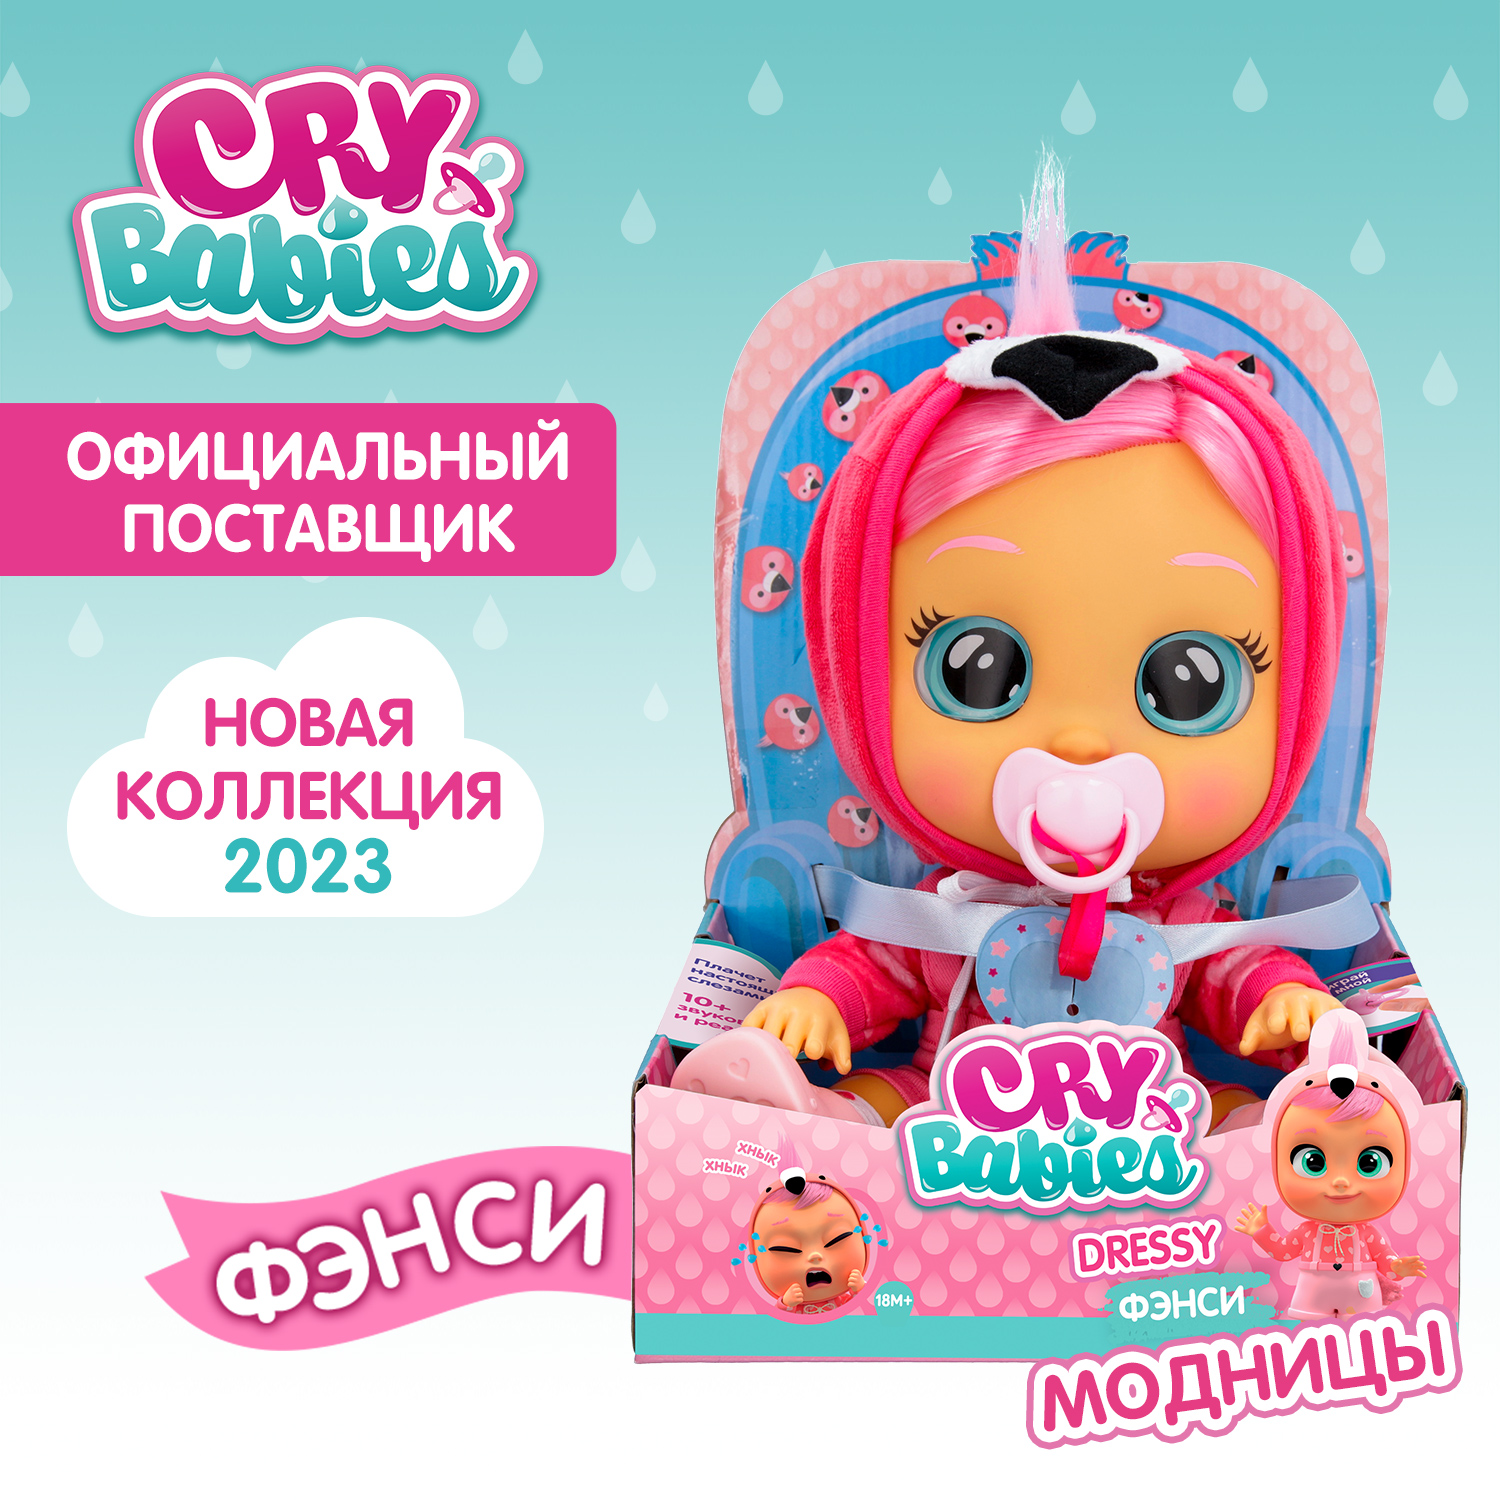 Кукла Cry Babies Фэнси Модница, интерактивная, плачущая, 40886 кукла cry babies кони модница интерактивная плачущая 40883